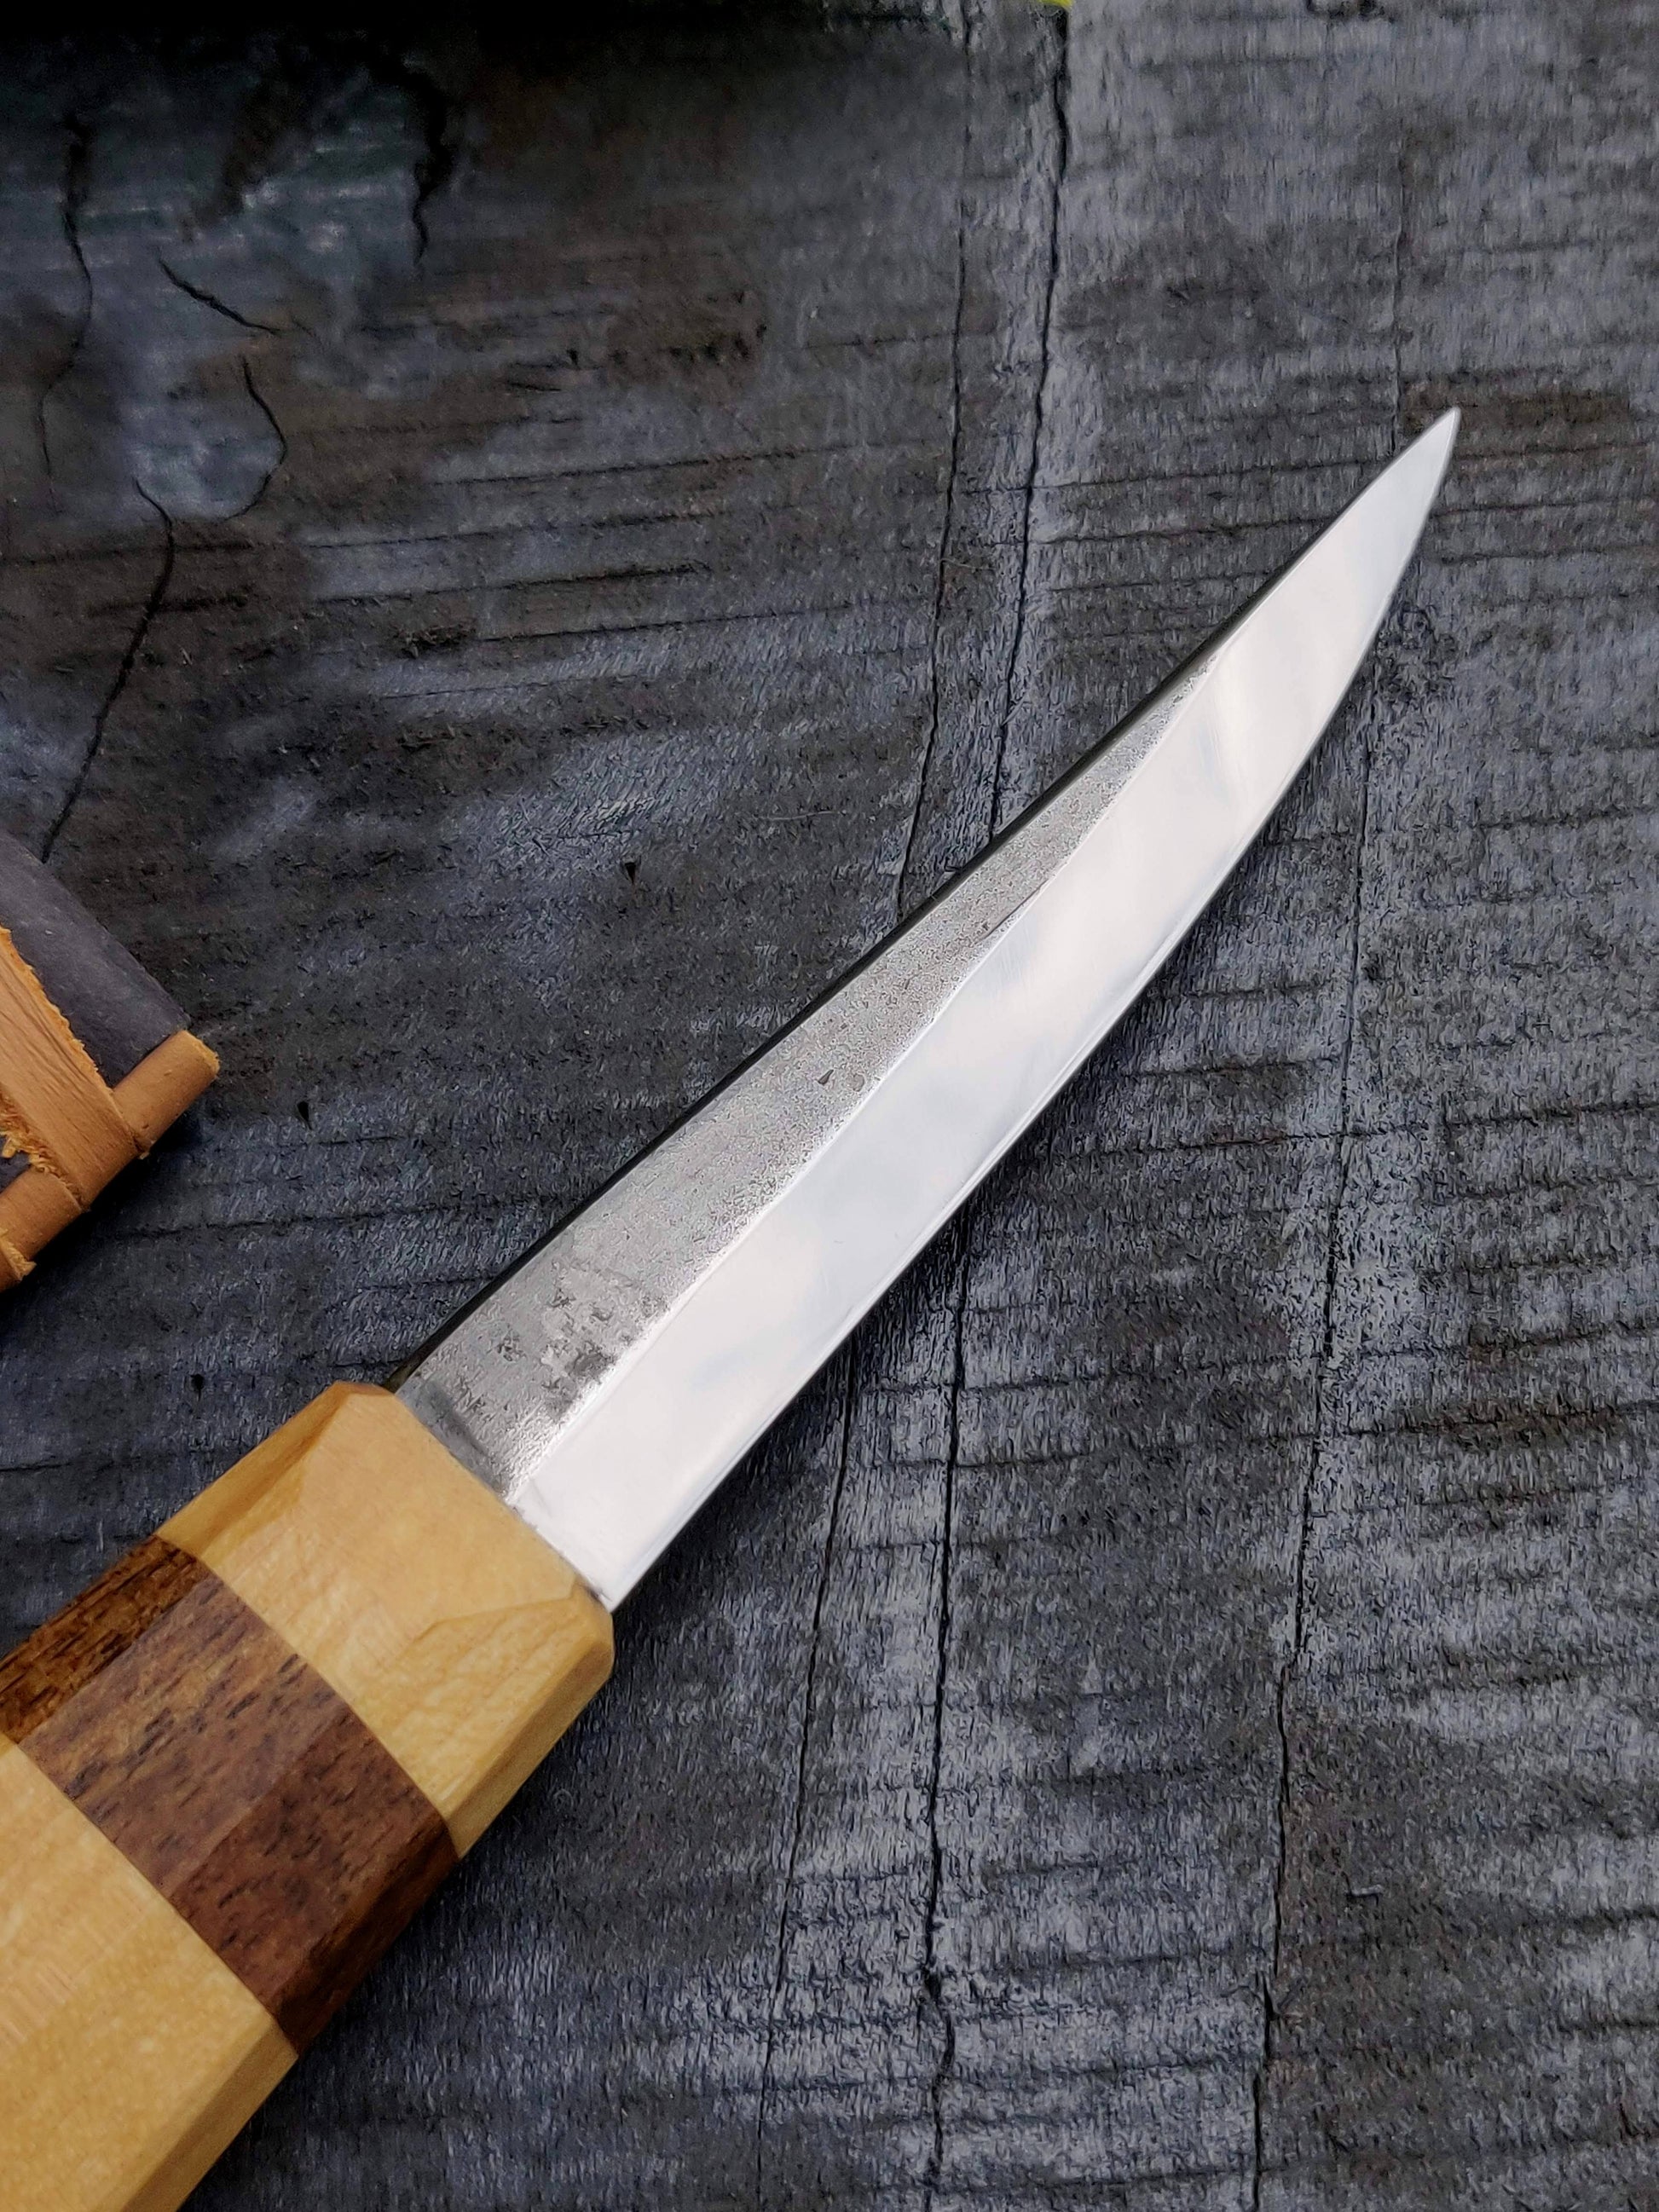 85mm Slojd knife, Whittling knife, Fresh wood carving, Handcarving - The  Spoon Crank